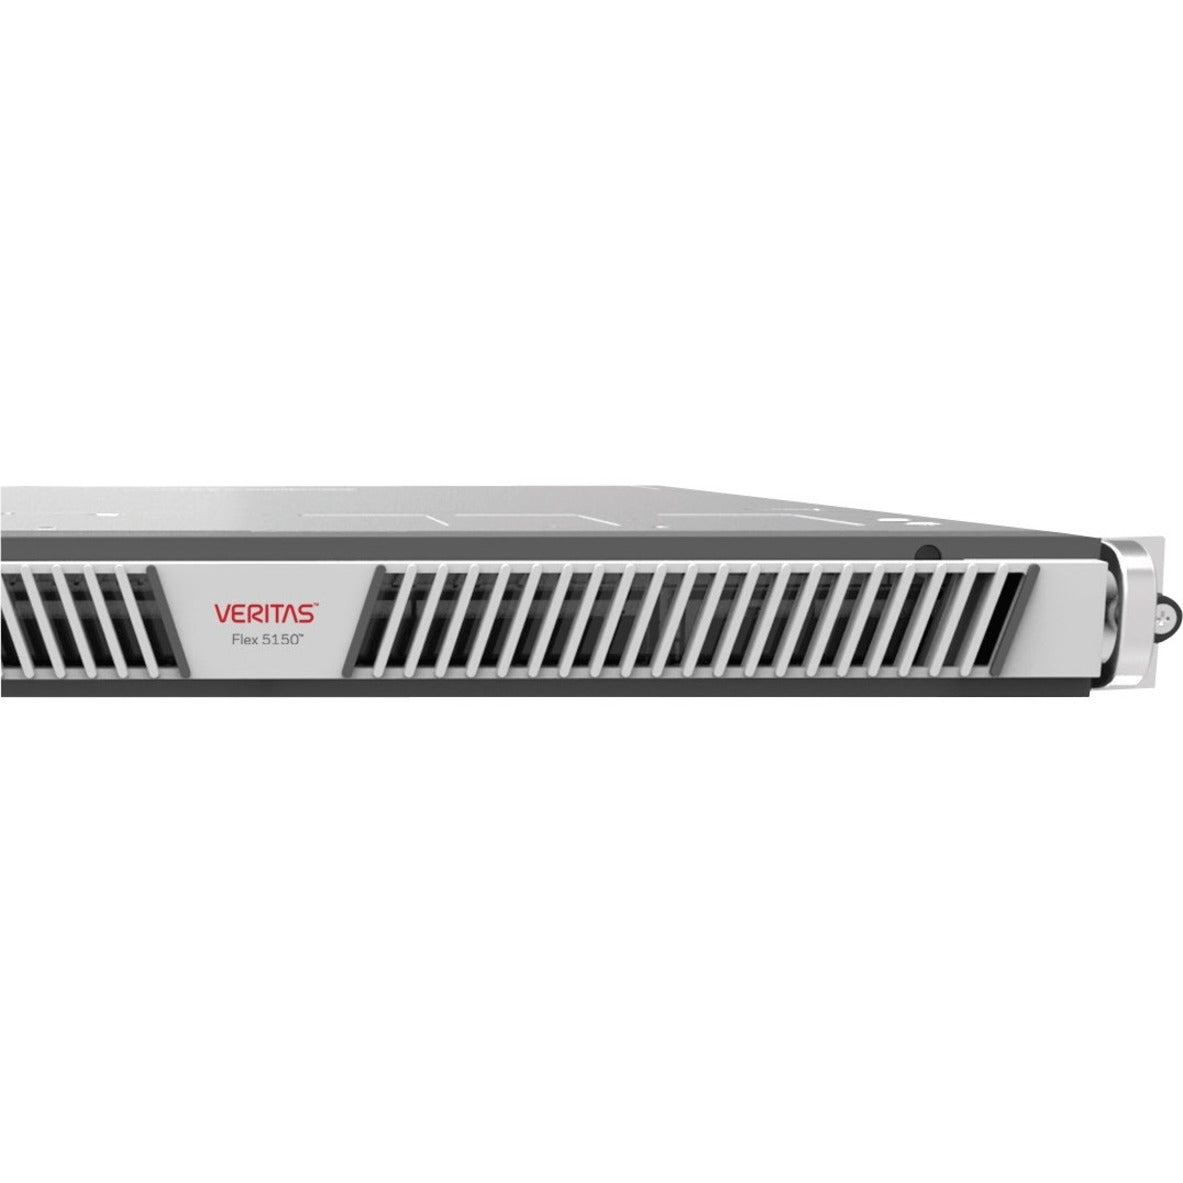 Veritas 26111-M4213 Flex System 5150 NAS Storage System, 15TB Total Hard Drive Capacity Installed, 12Gb/s SAS Controller, 4 Network (RJ-45) Ports, Rack-mountable